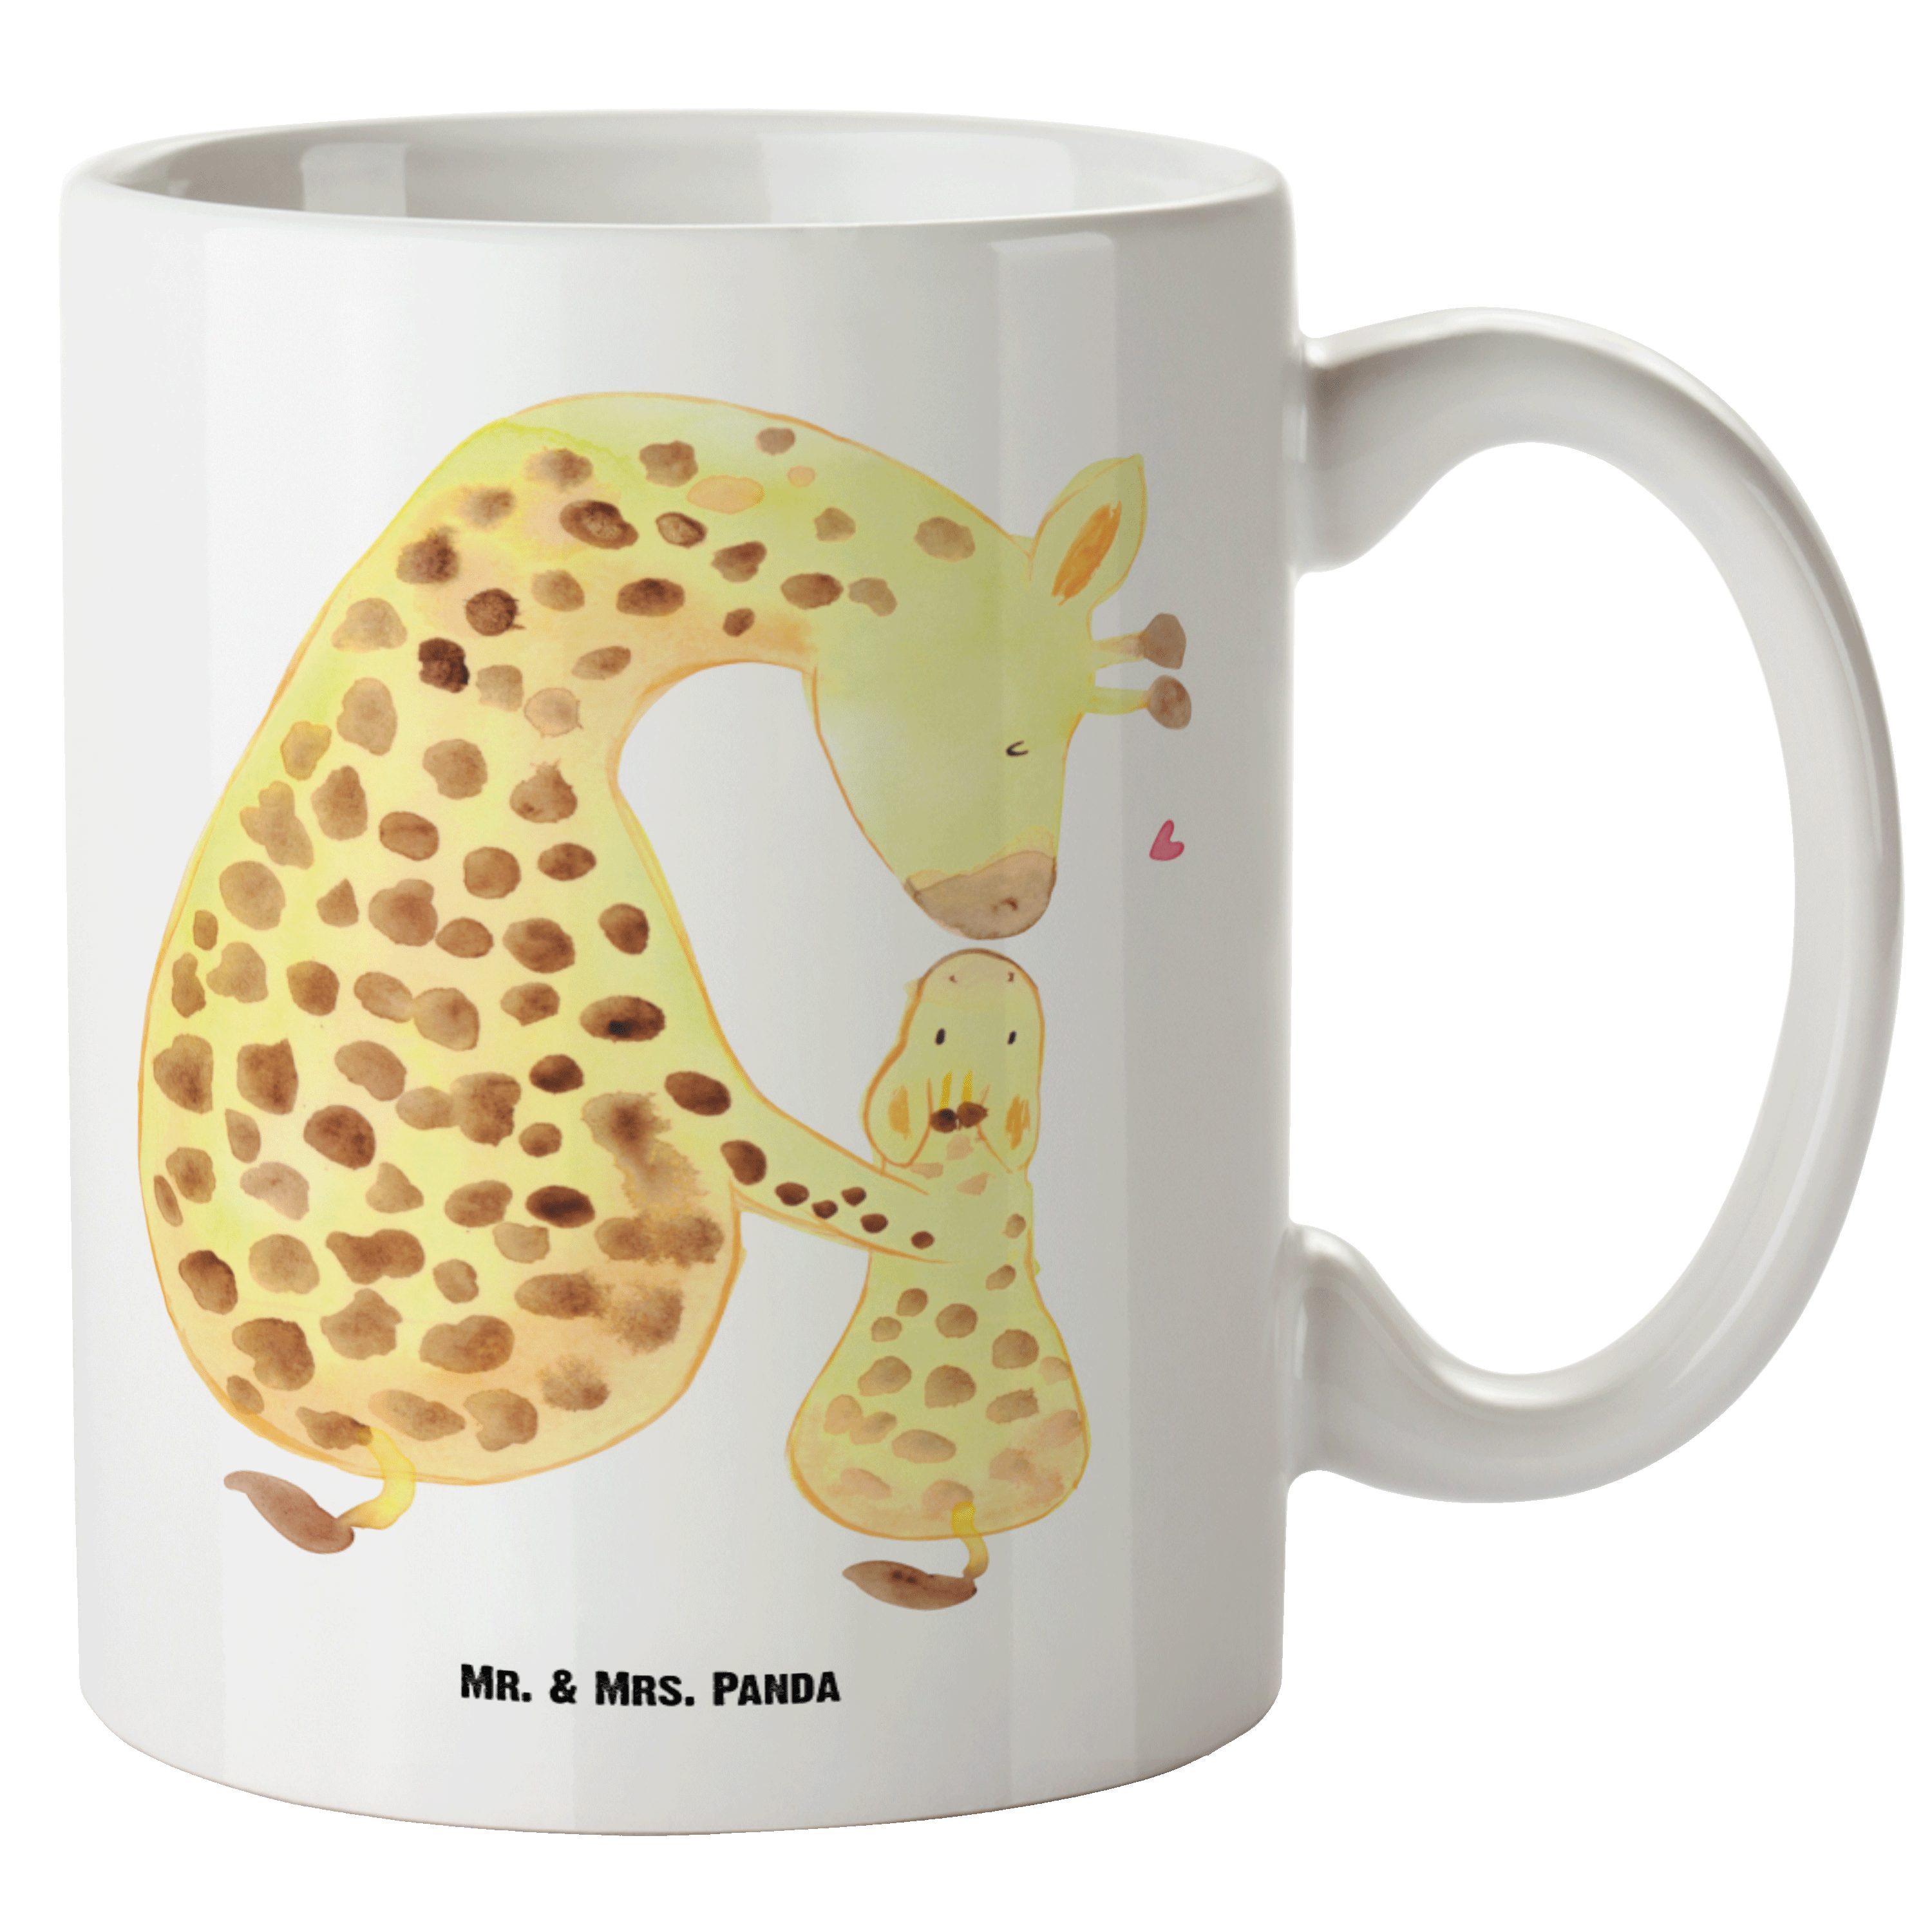 Mr. & Mrs. Panda Tasse Keramik mit Tasse Mutter, Sohn, XL - Afrika, - Becher, Kind Geschenk, XL Weiß Giraffe